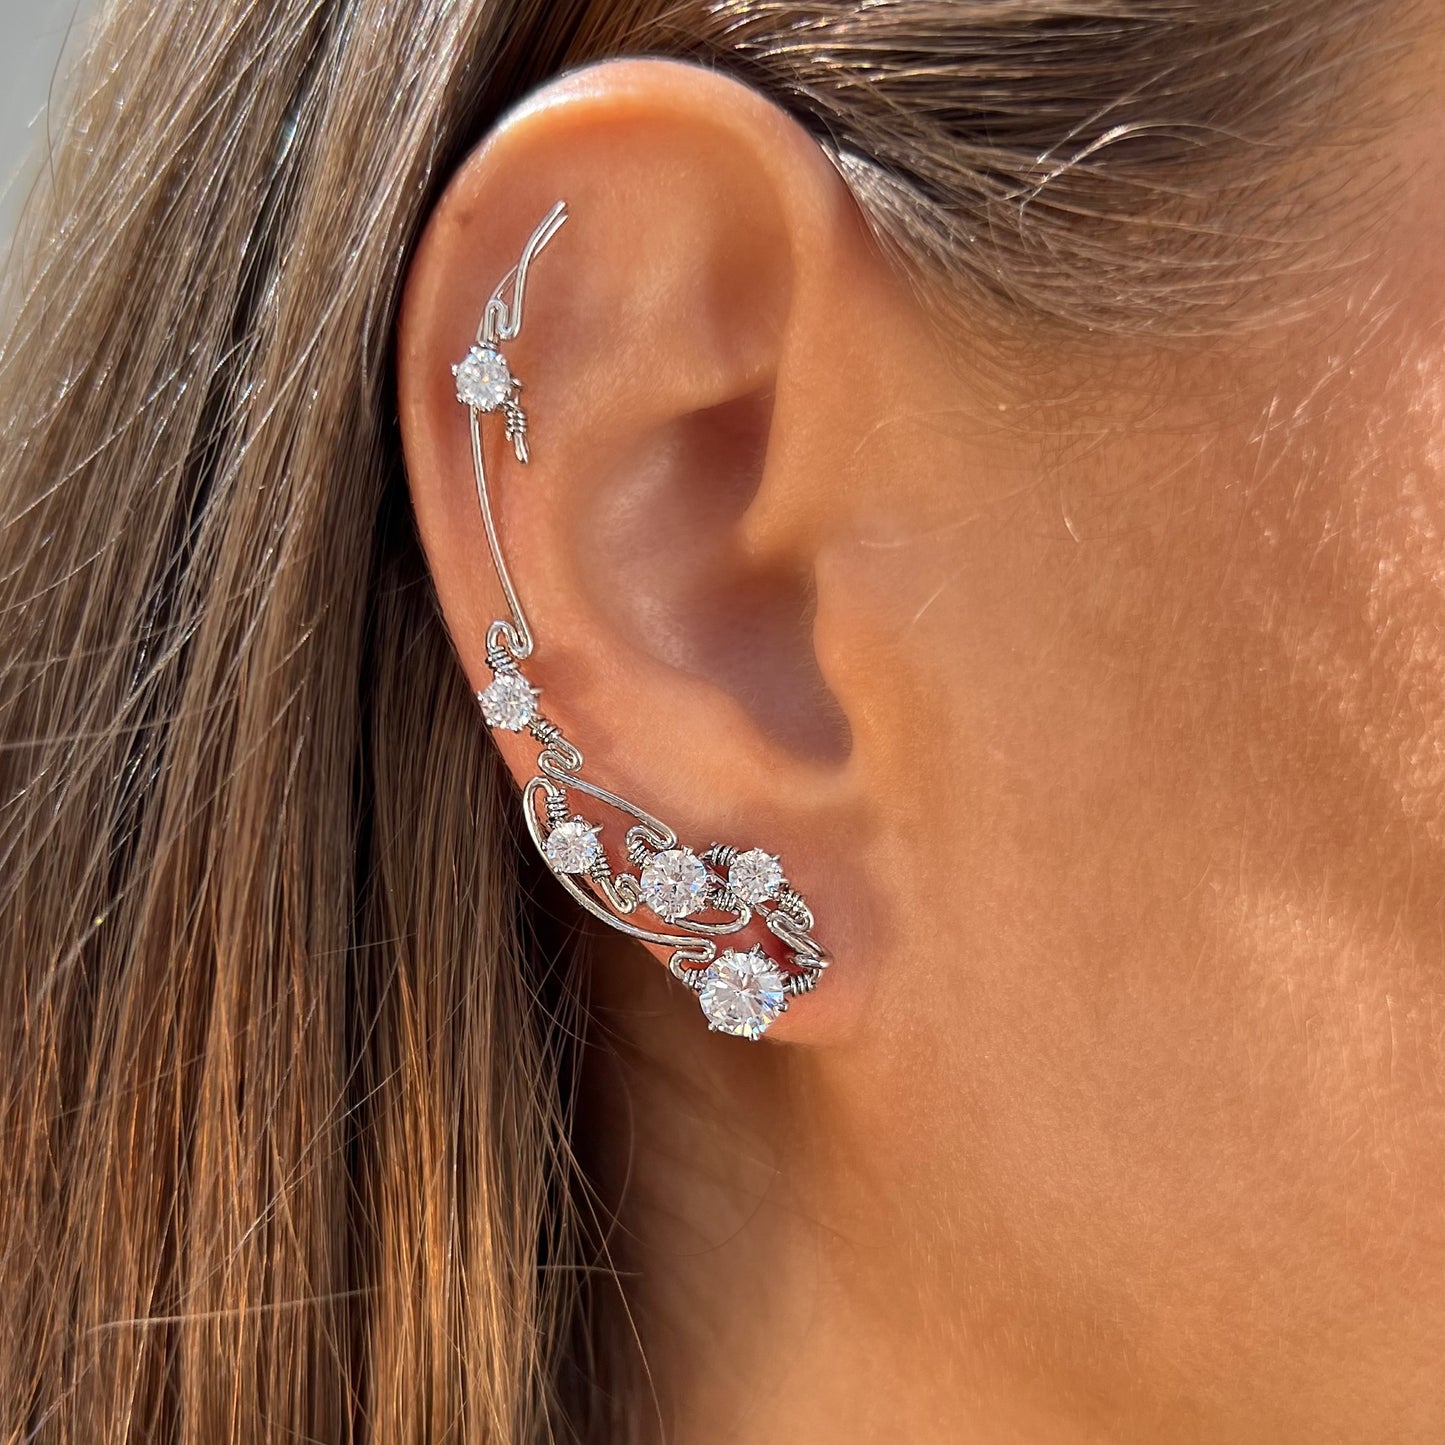 LUNA ear climbers with CZ diamonds - 14K Gold